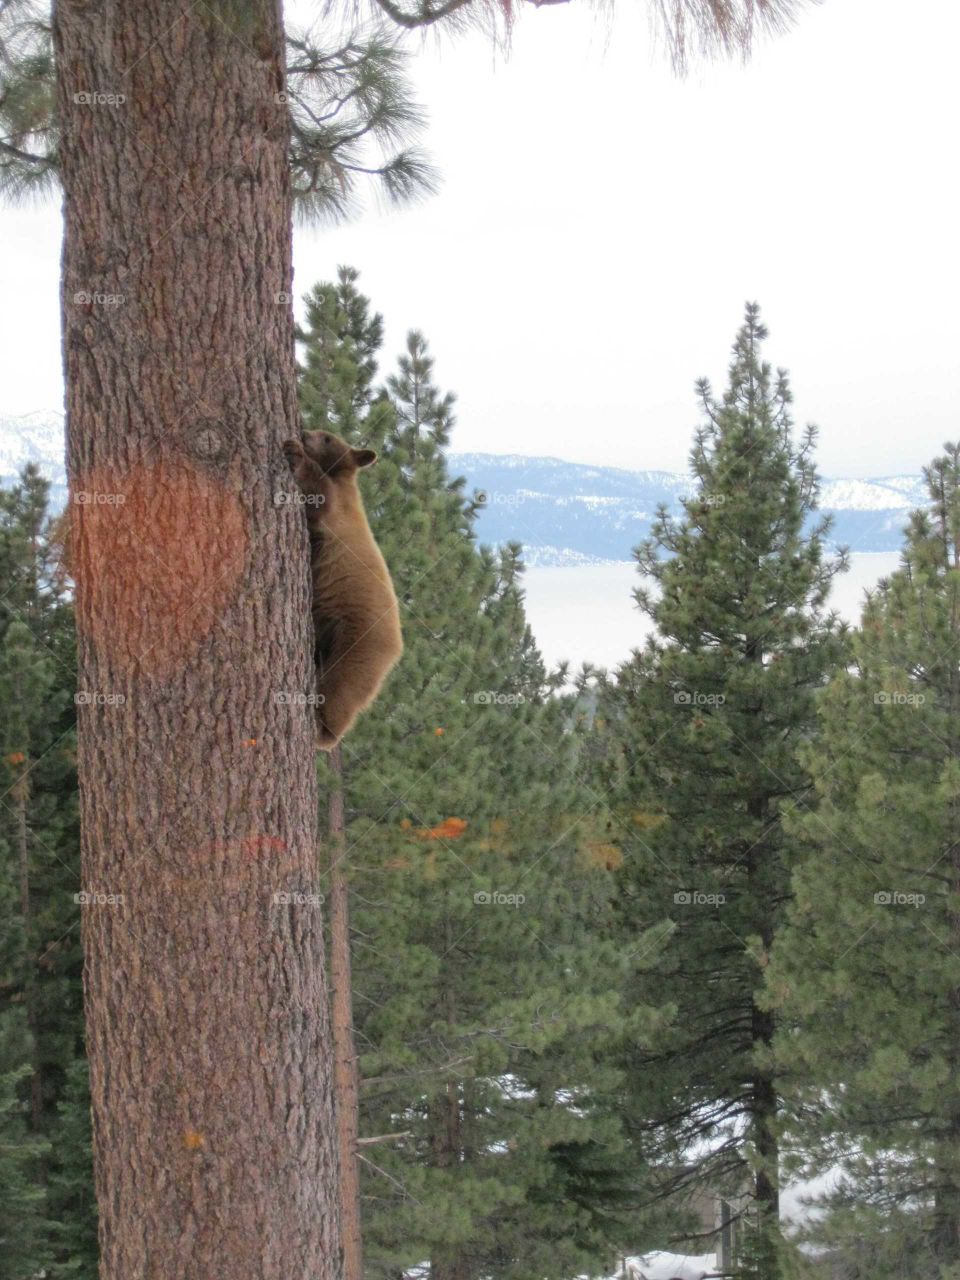 Bear climbing down a tree in South Lake Tahoe